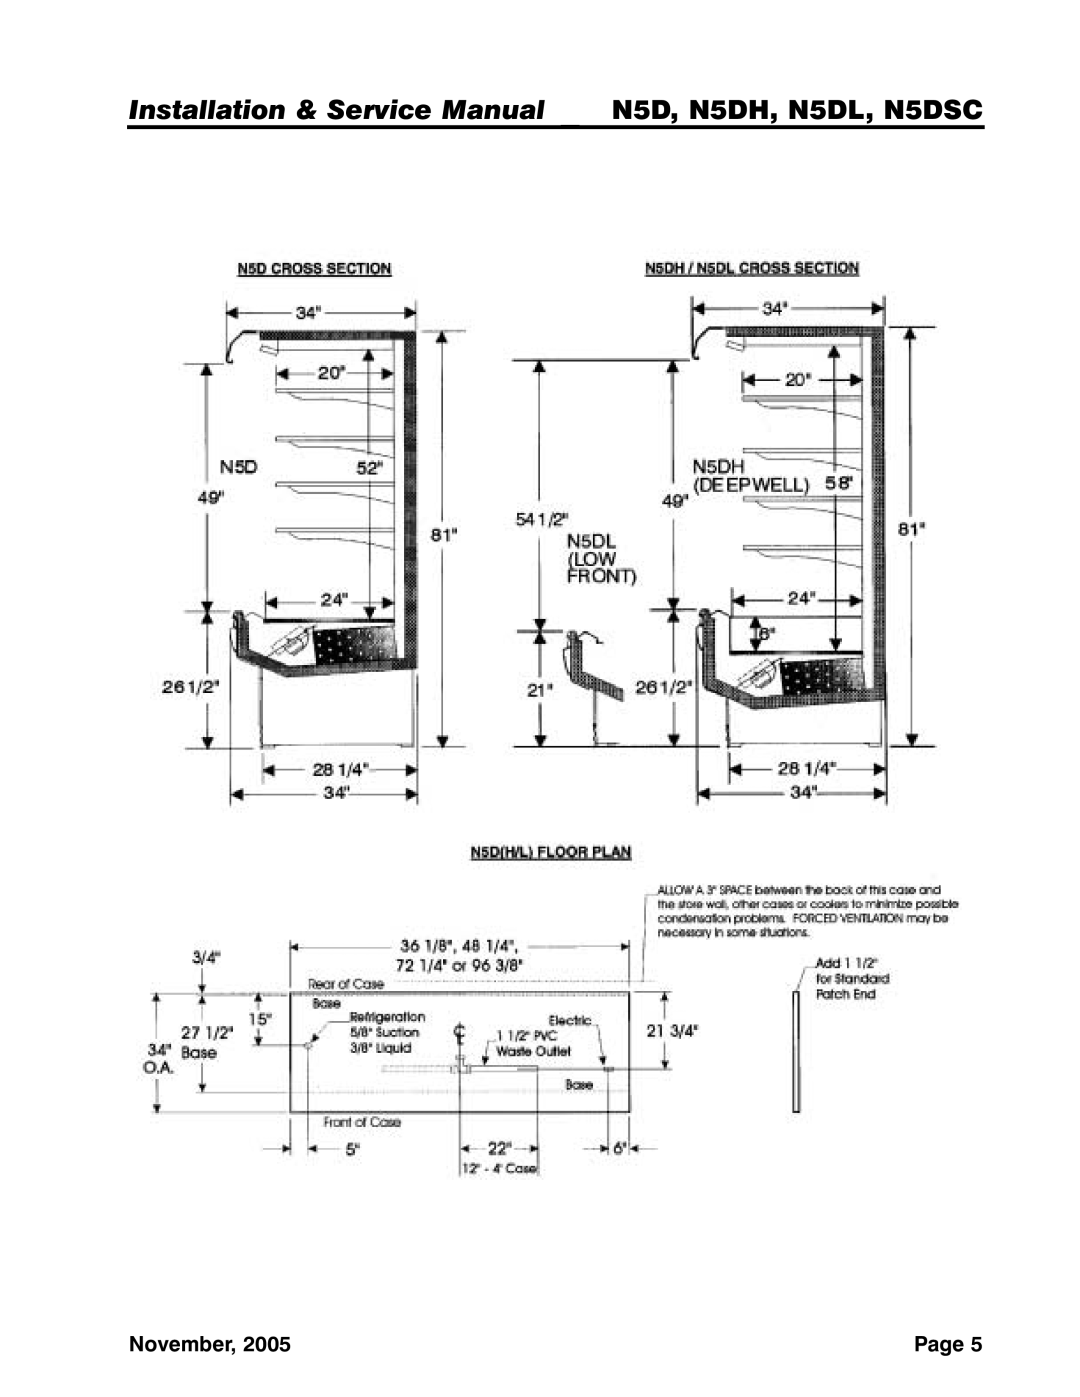 Tyler Refrigeration service manual N5D, N5DH, N5DL, N5DSC, November, Page 